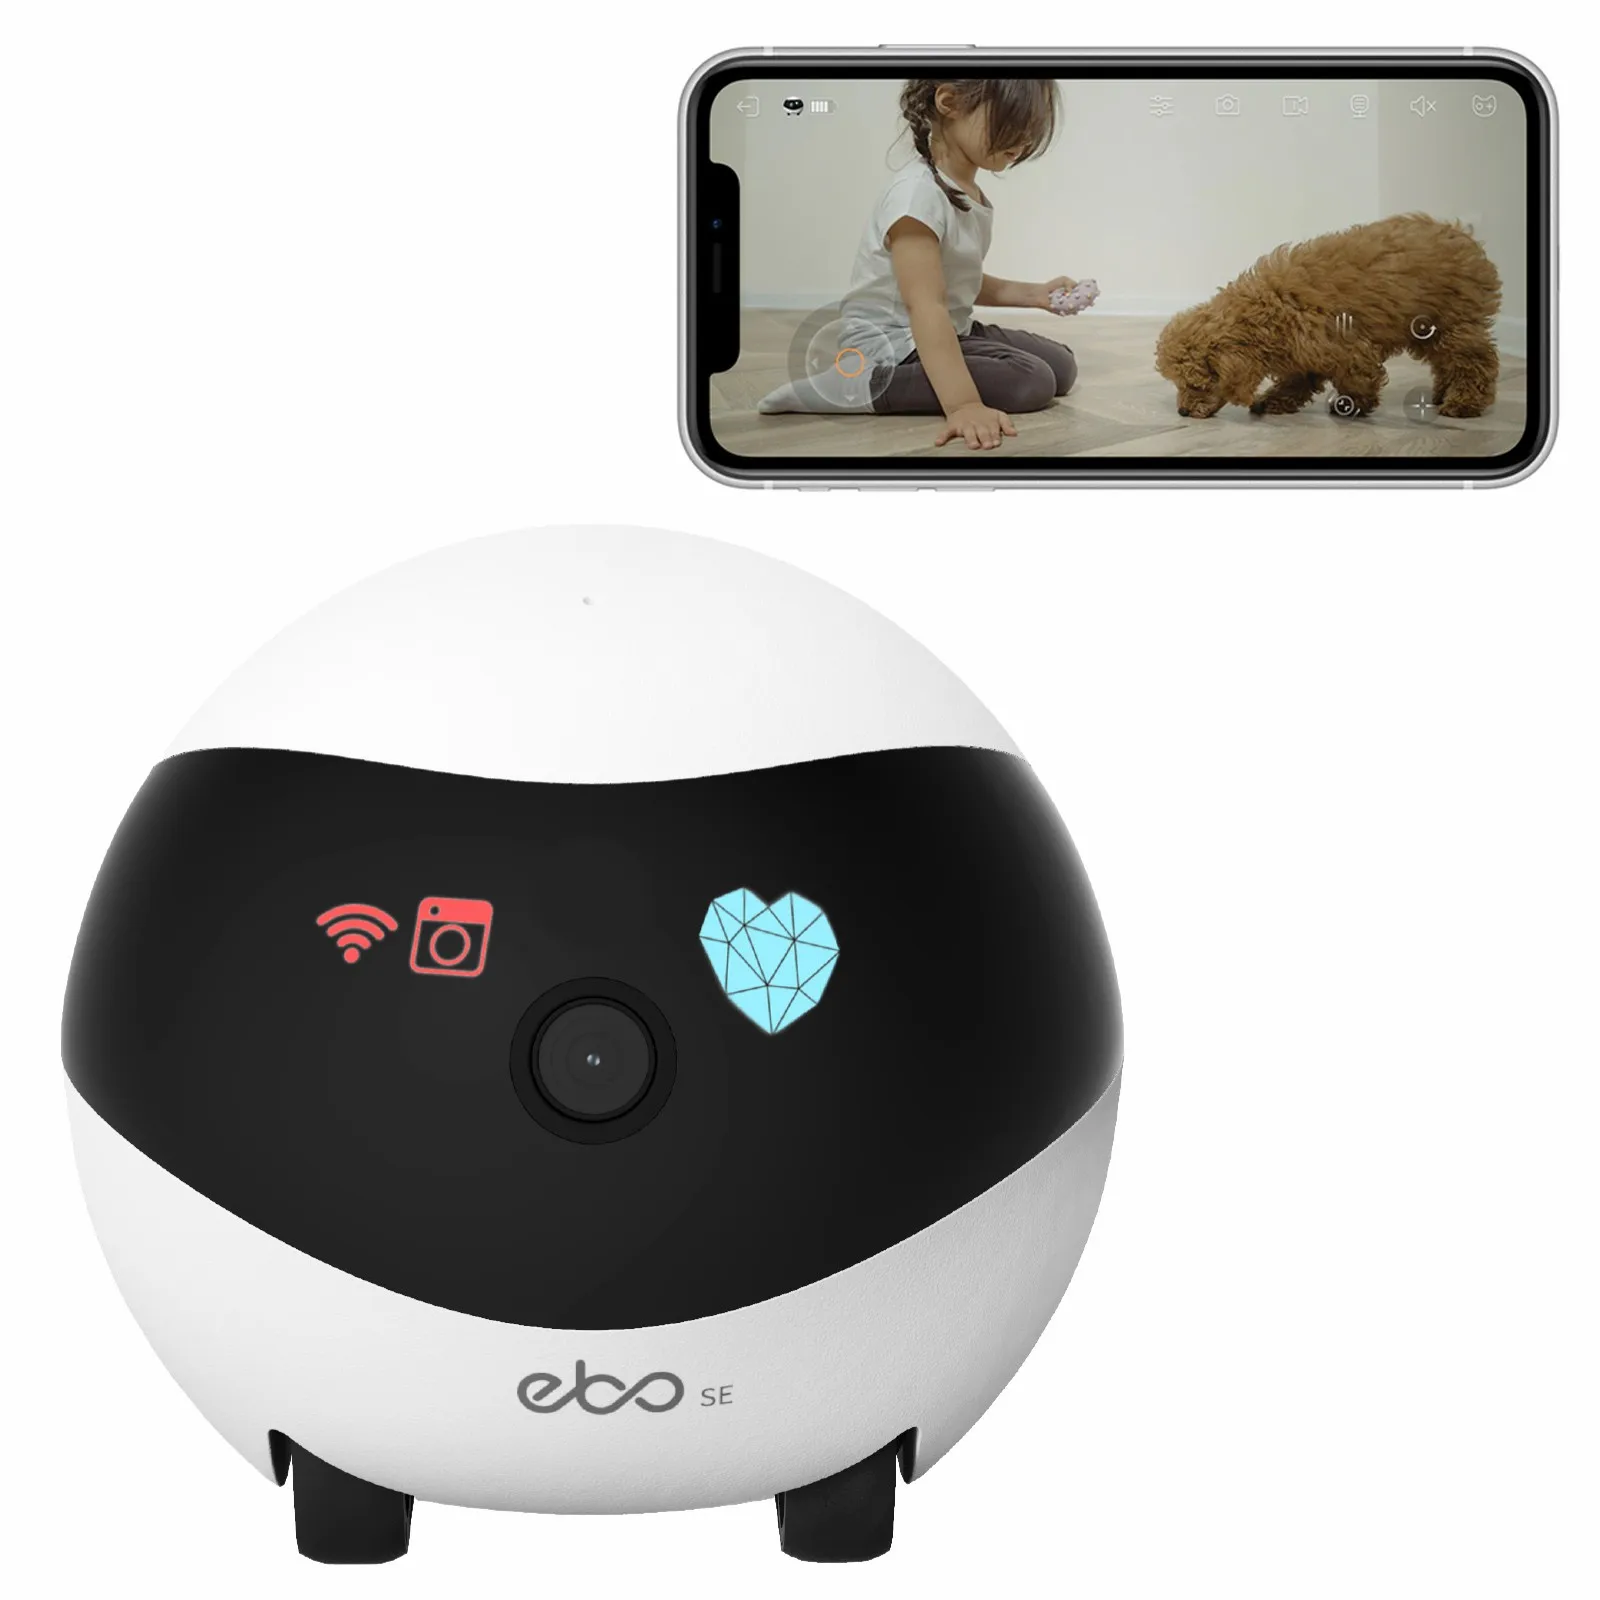 

EBO SE Smart Home Companion Robot Family Monitor Security Camera Audio 1080P HD